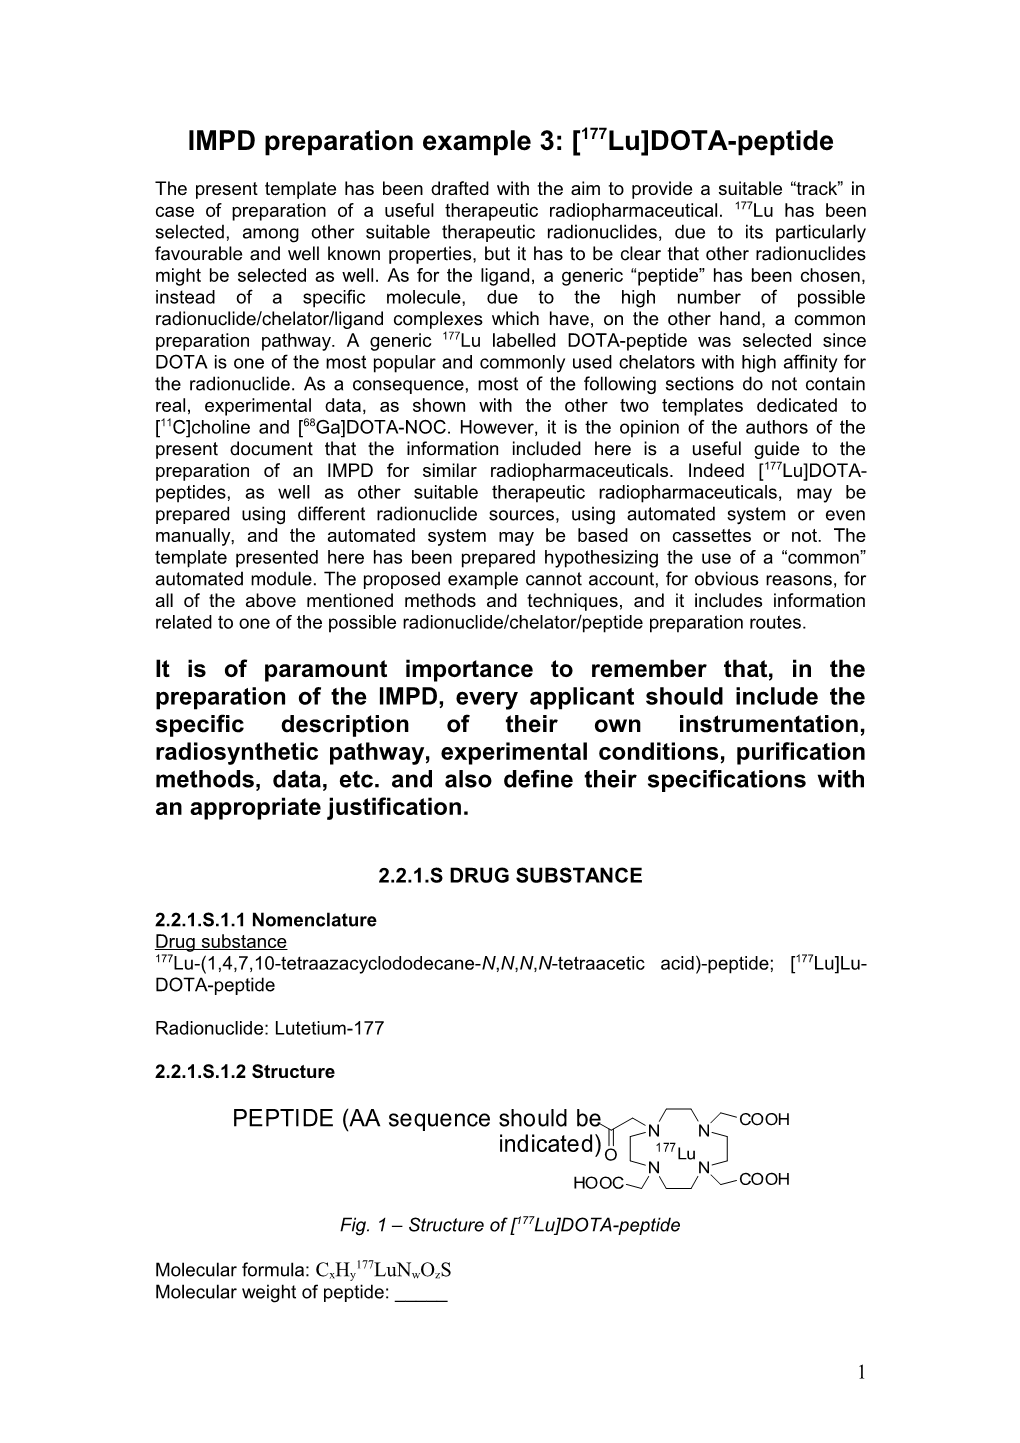 IMPD Preparation Example 3: 177Lu DOTA-Peptide